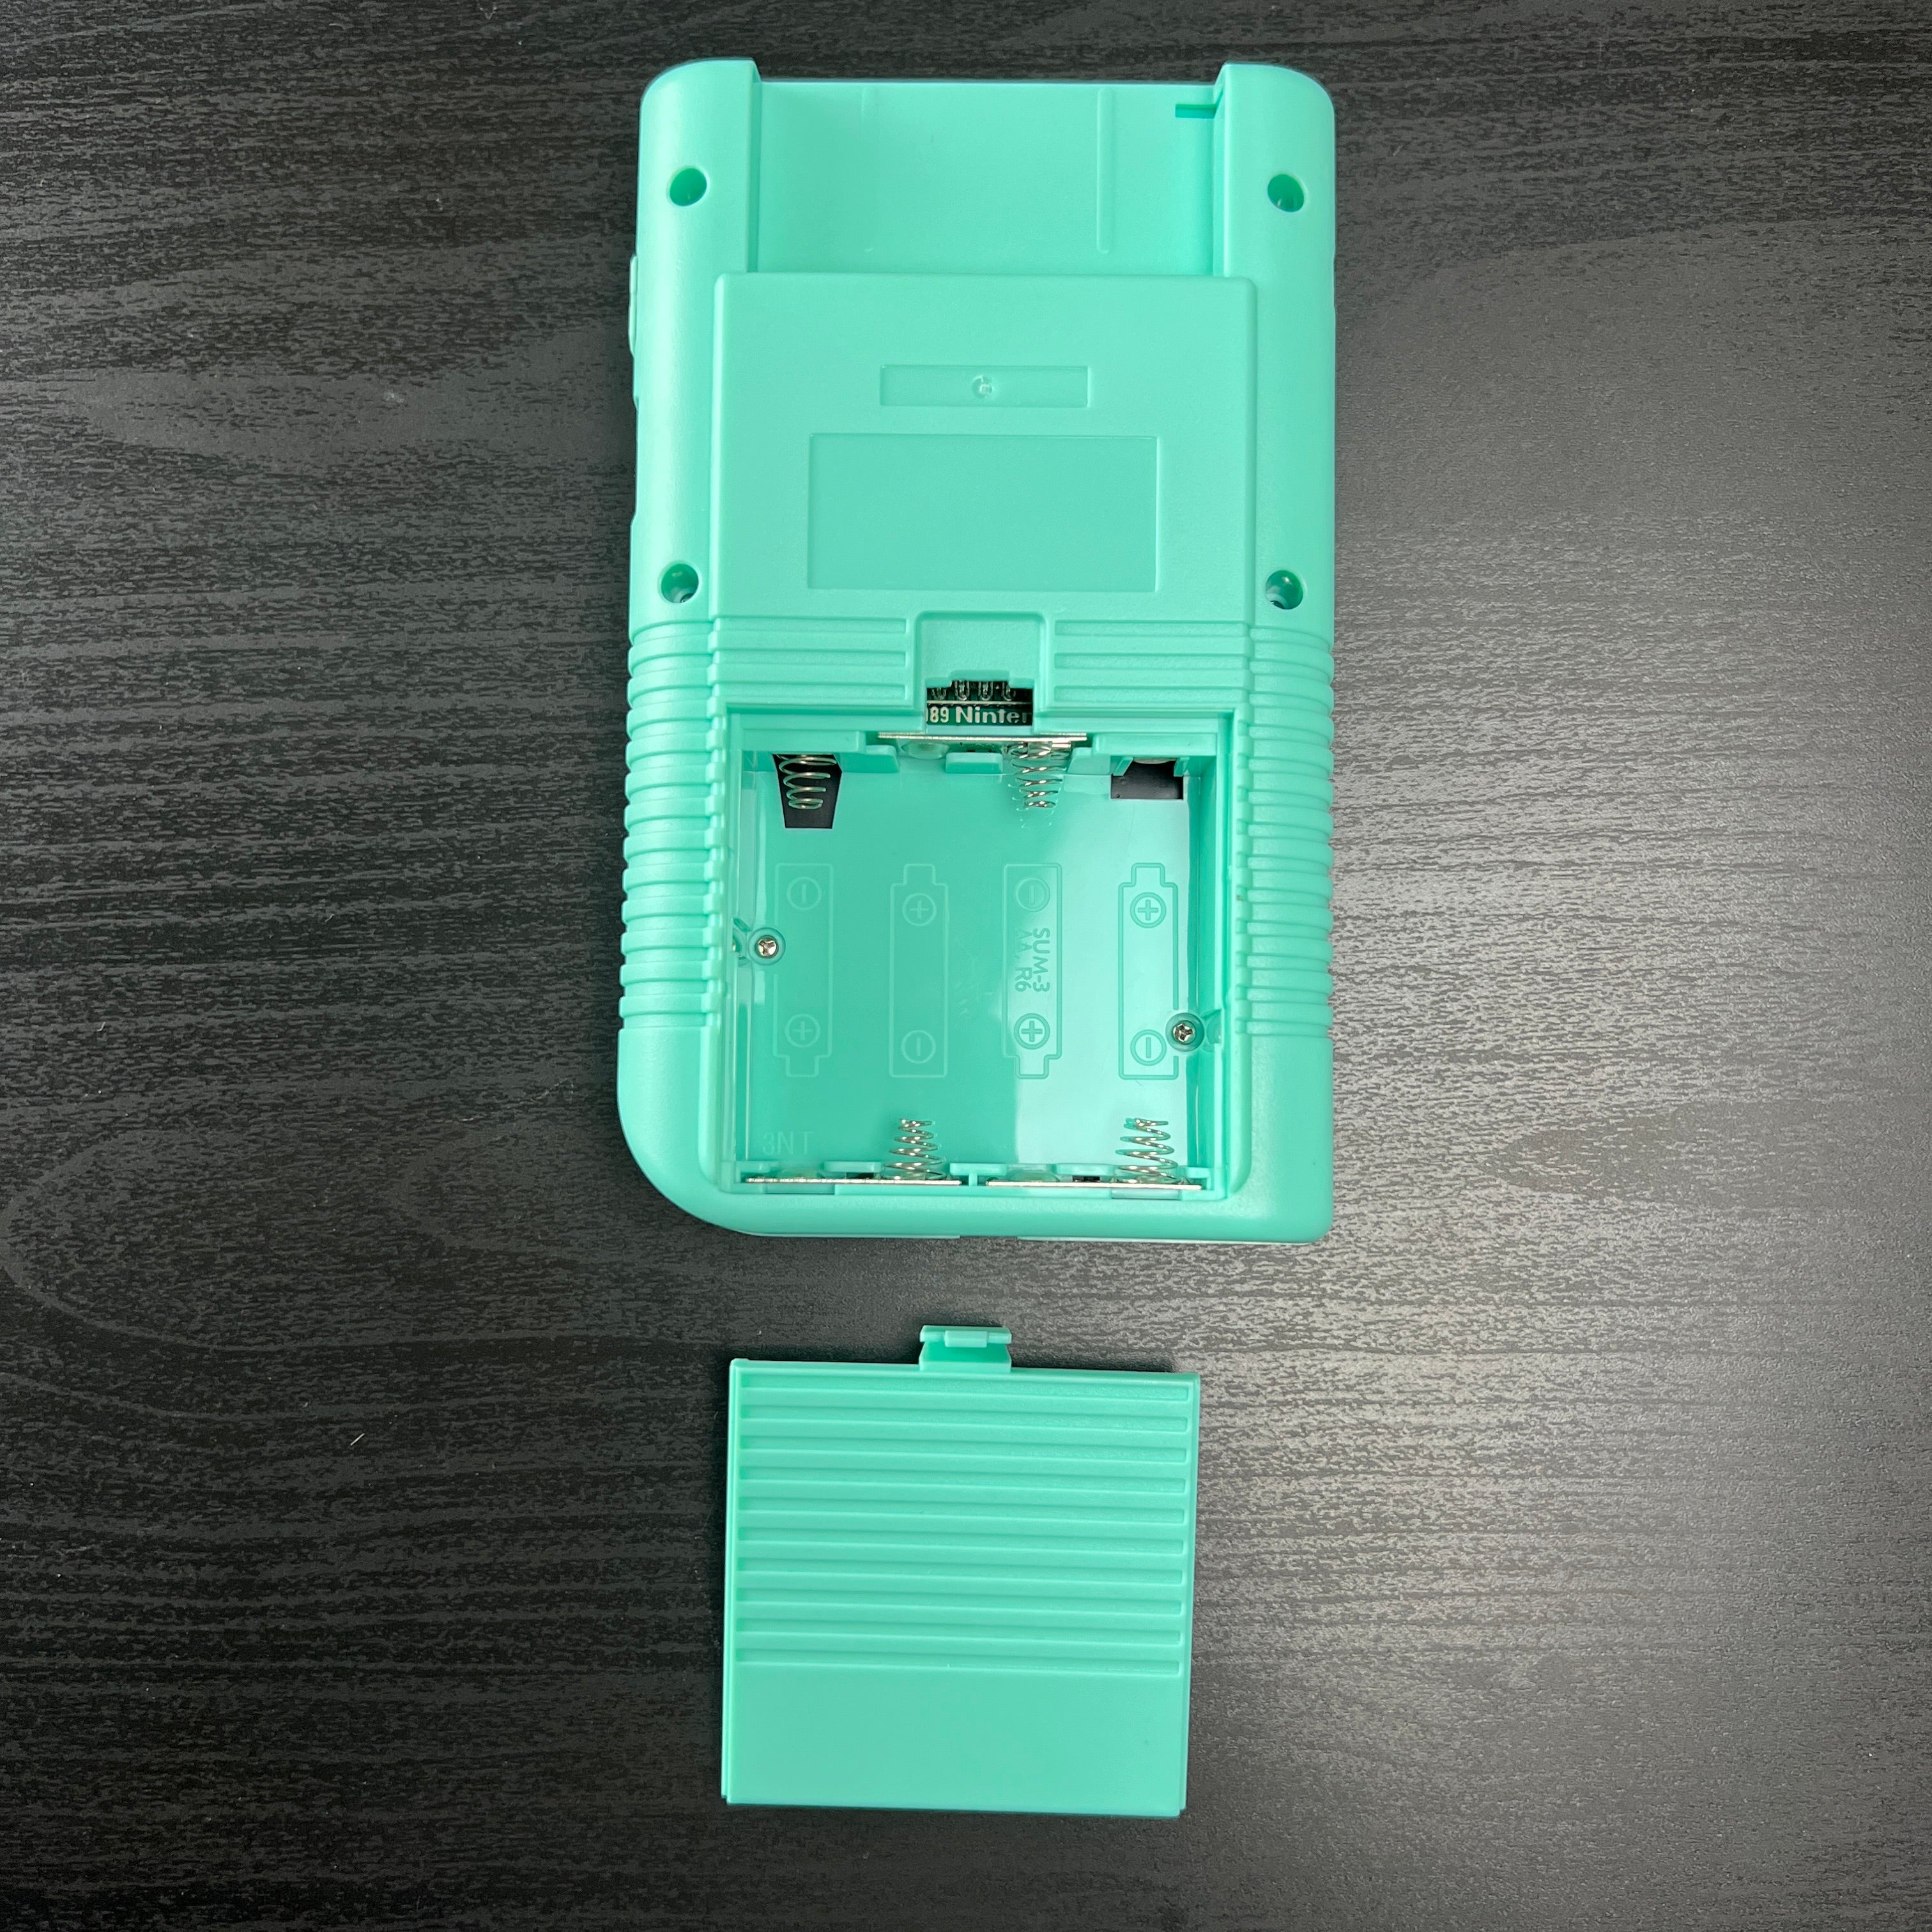 Modded DMG Game Boy w/ FP IPS Display (Teal)